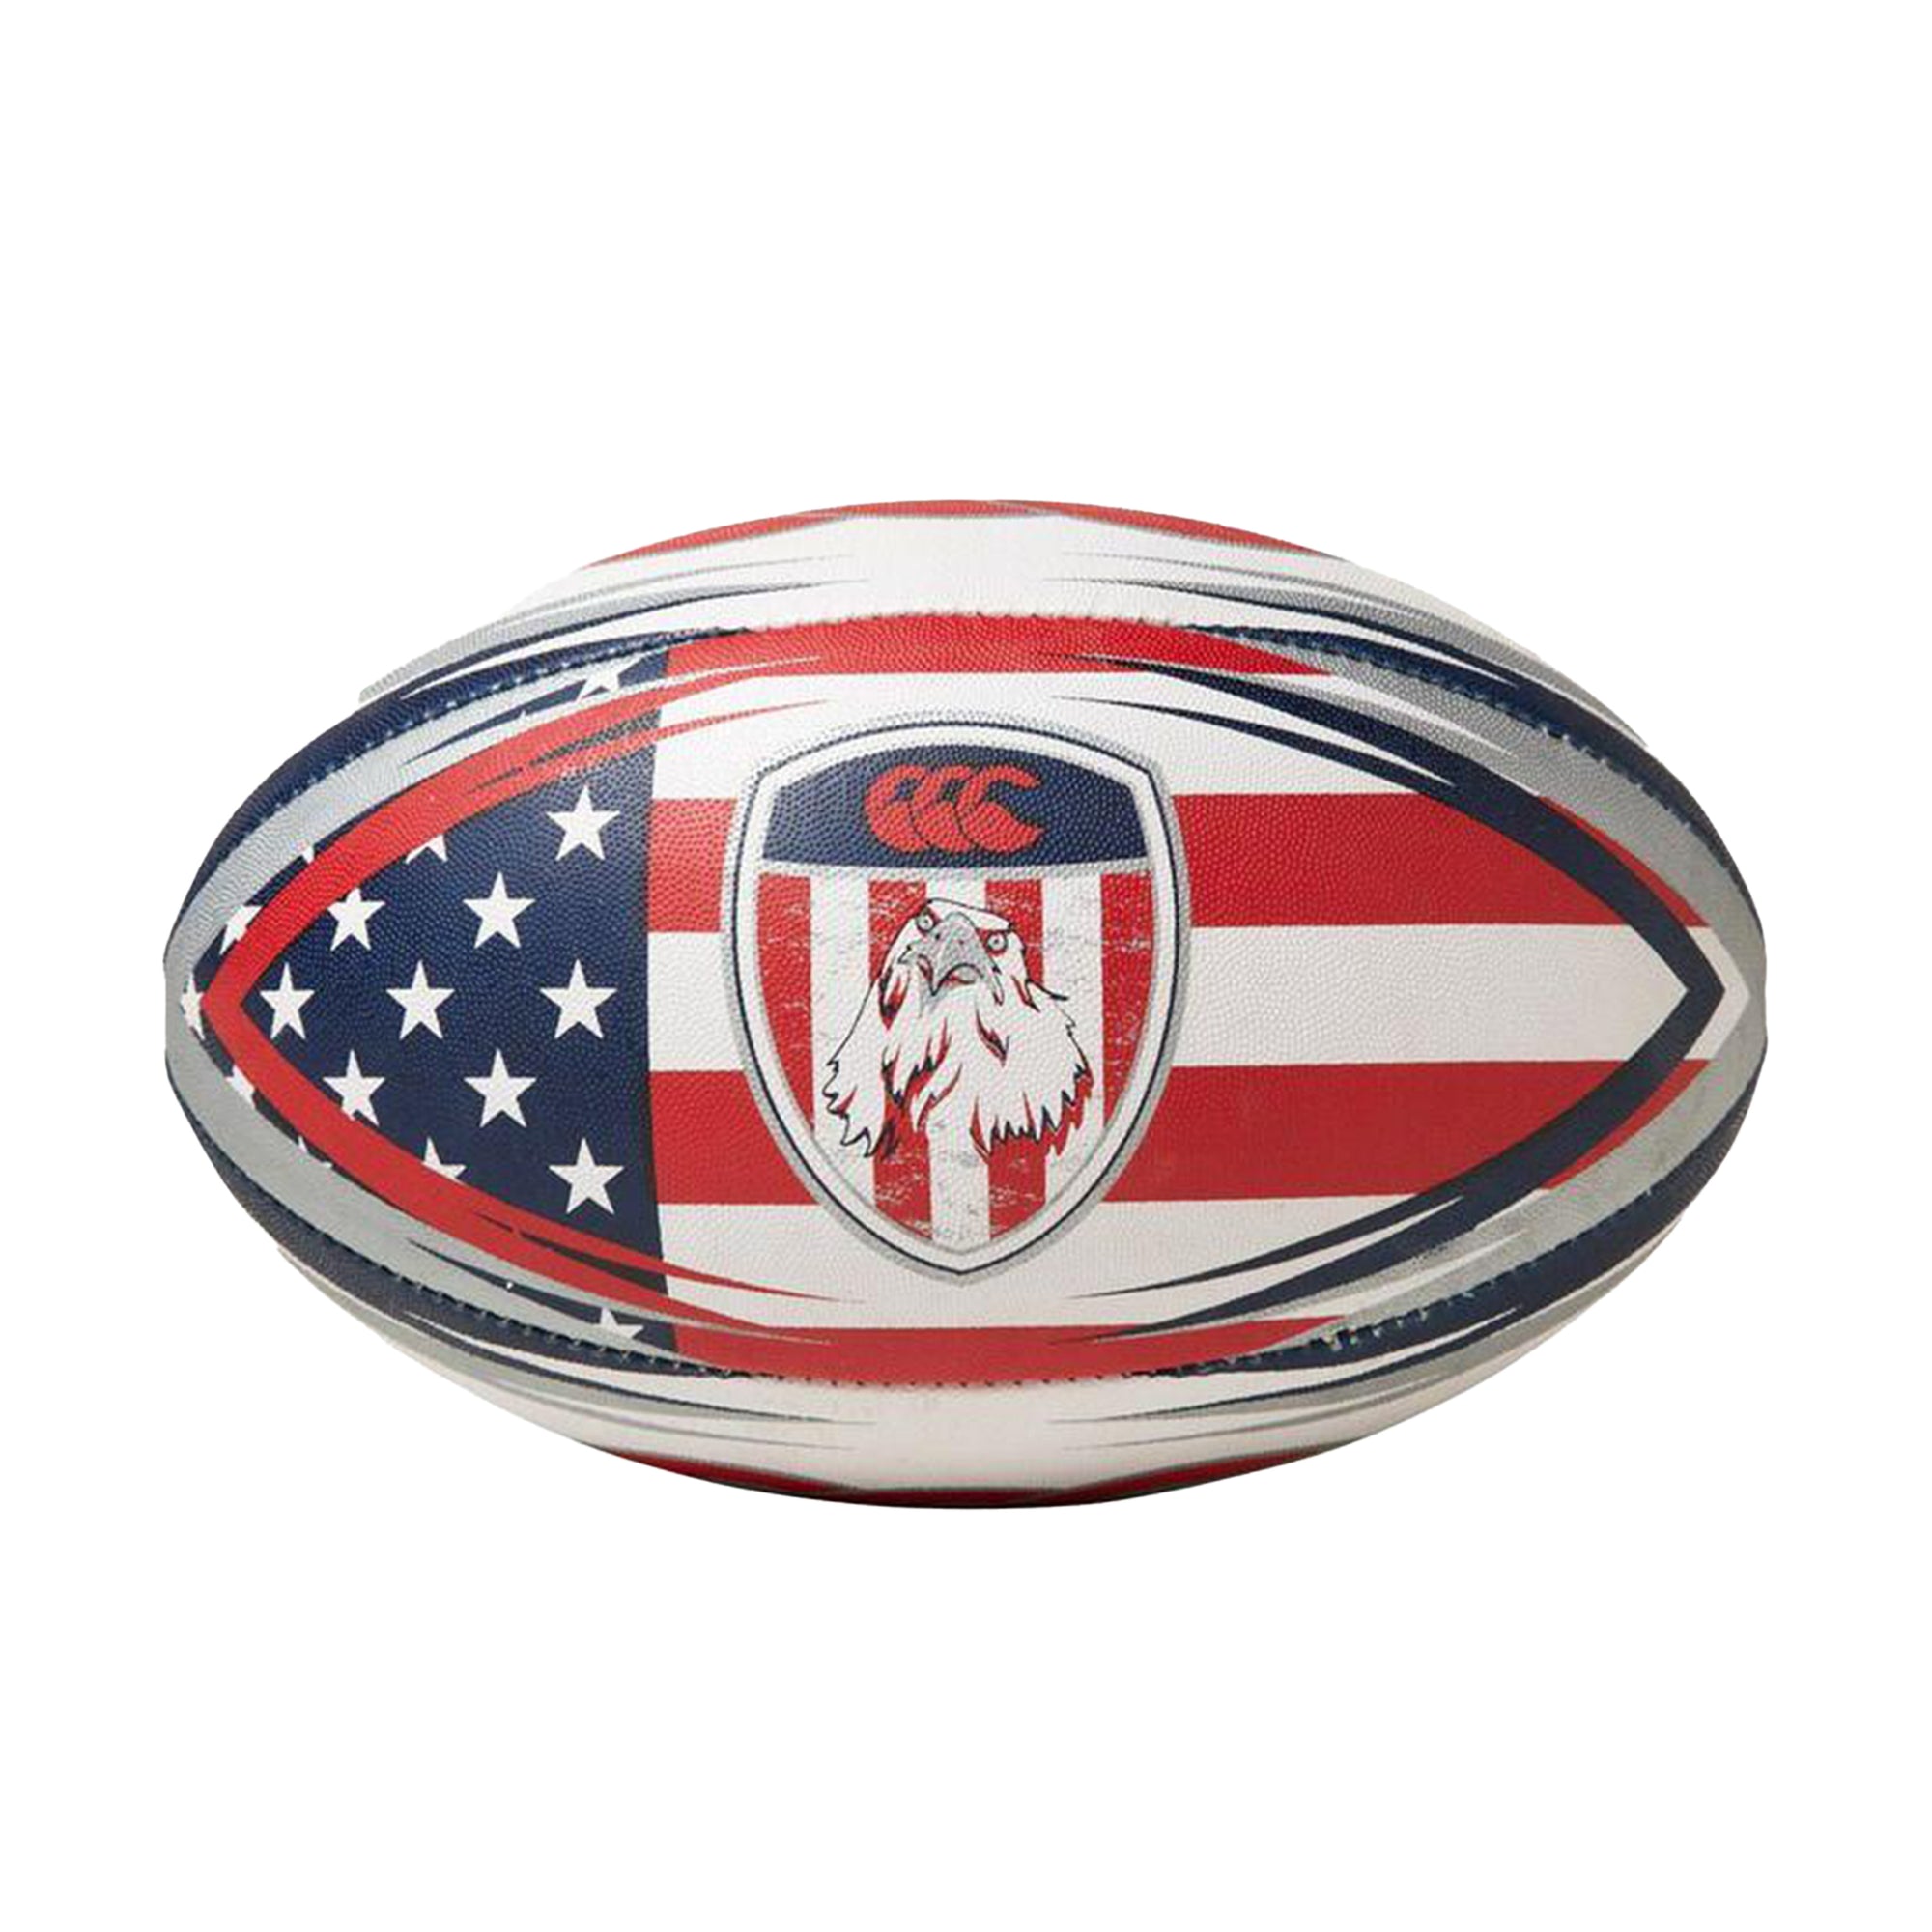 Canterbury Catalast XV Match Rugby Ball - Size 5 - Custom MTO